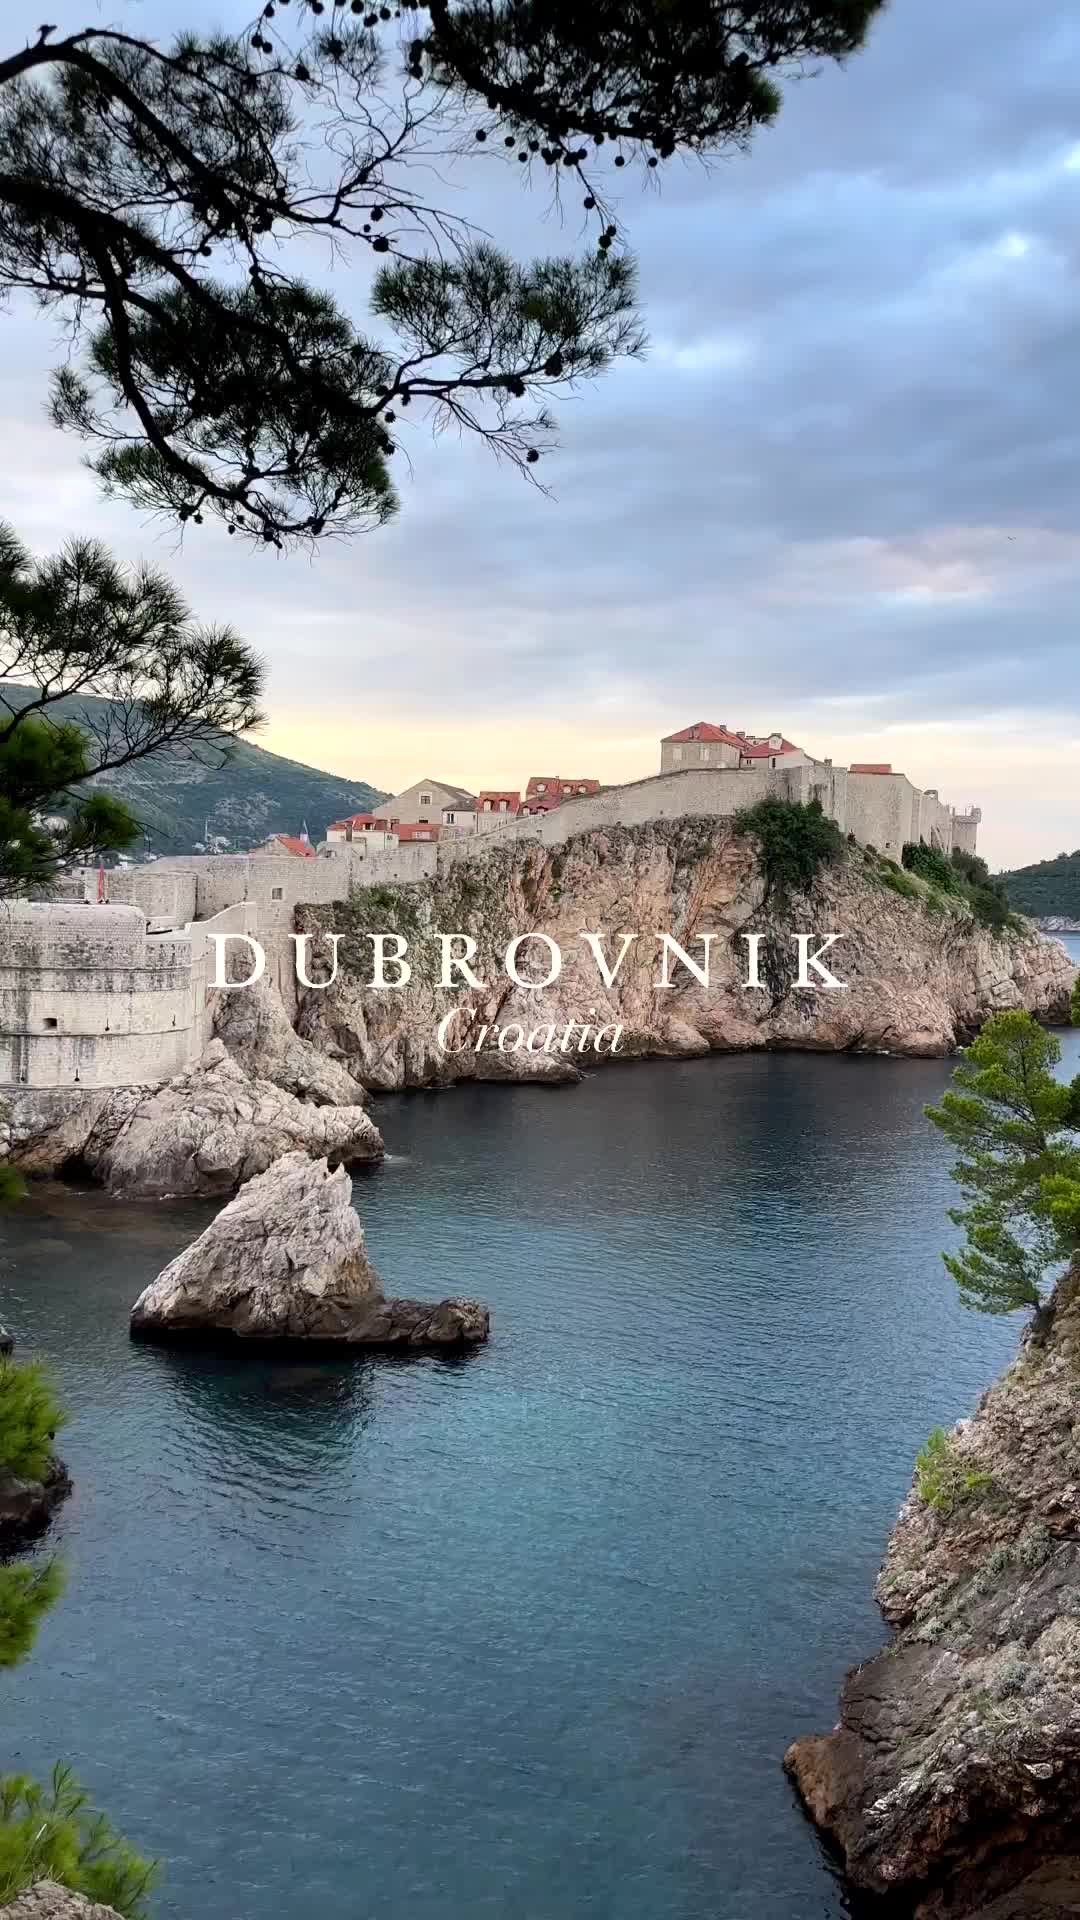 Must-Visit Spots in Old Town Dubrovnik